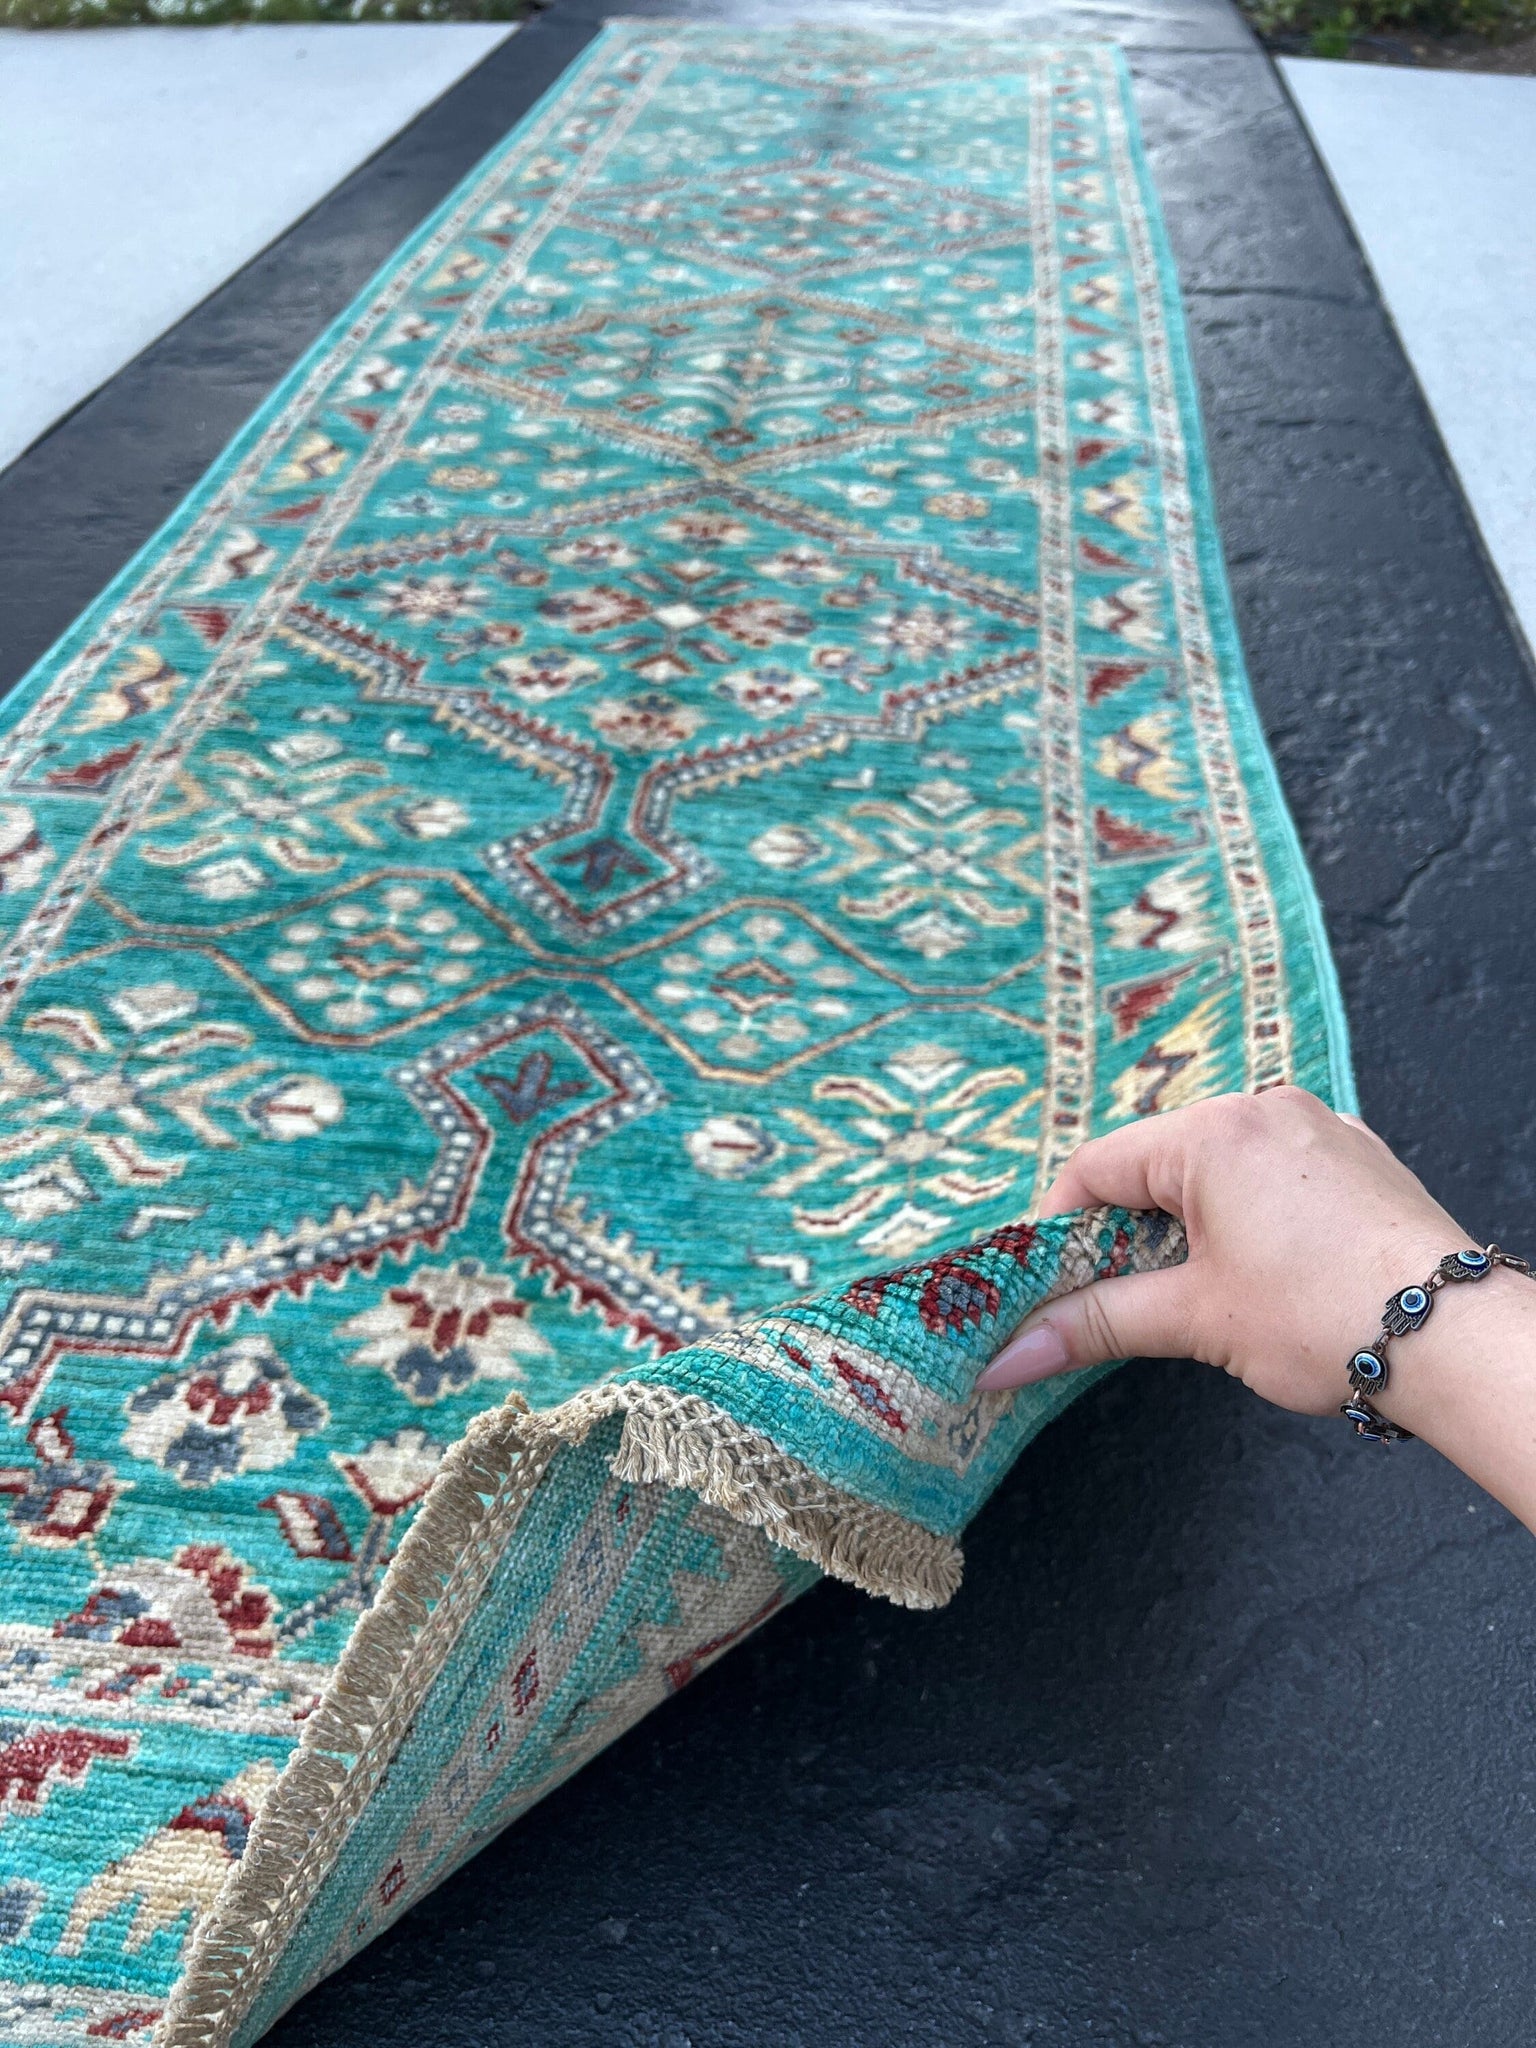 3x10 (90x275) Handmade Afghan Runner Rug | Turquoise Red Cream Beige Charcoal Grey | Hand Knotted Wool Woven Turkish Oushak Tribal Geometric